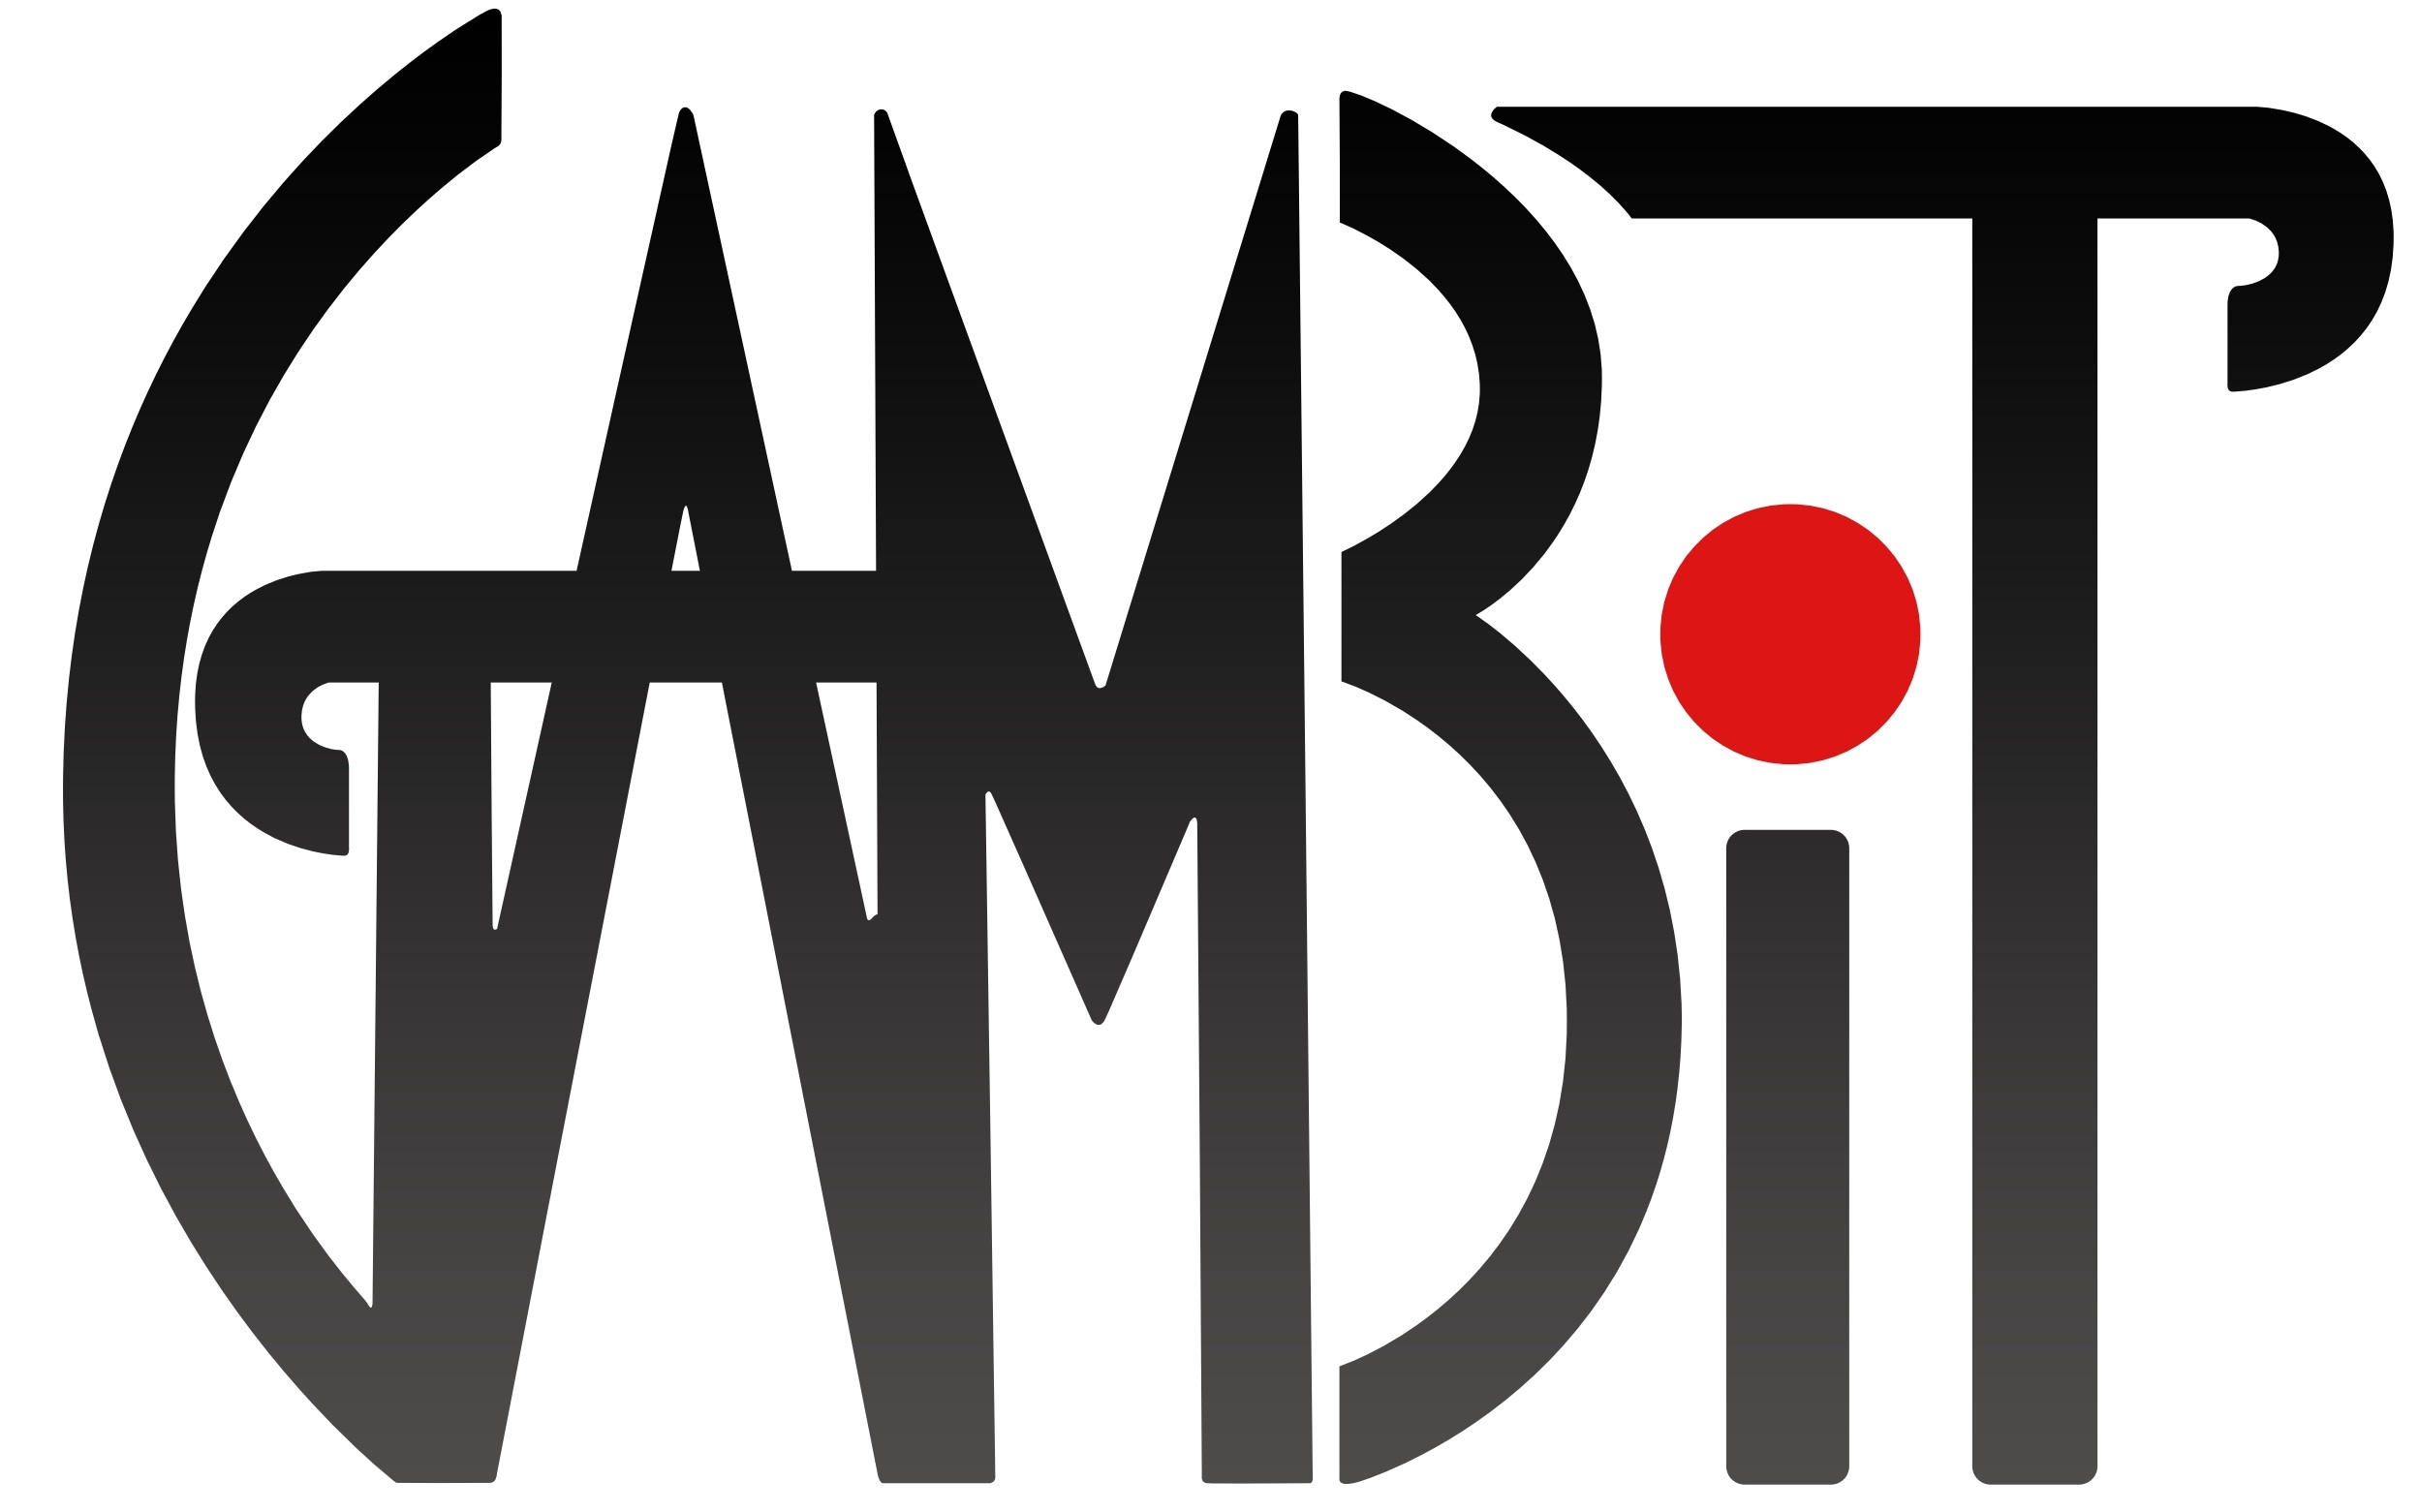 GAMBIT Logo.jpg f234b8f849a5211f0245cb987e65c506